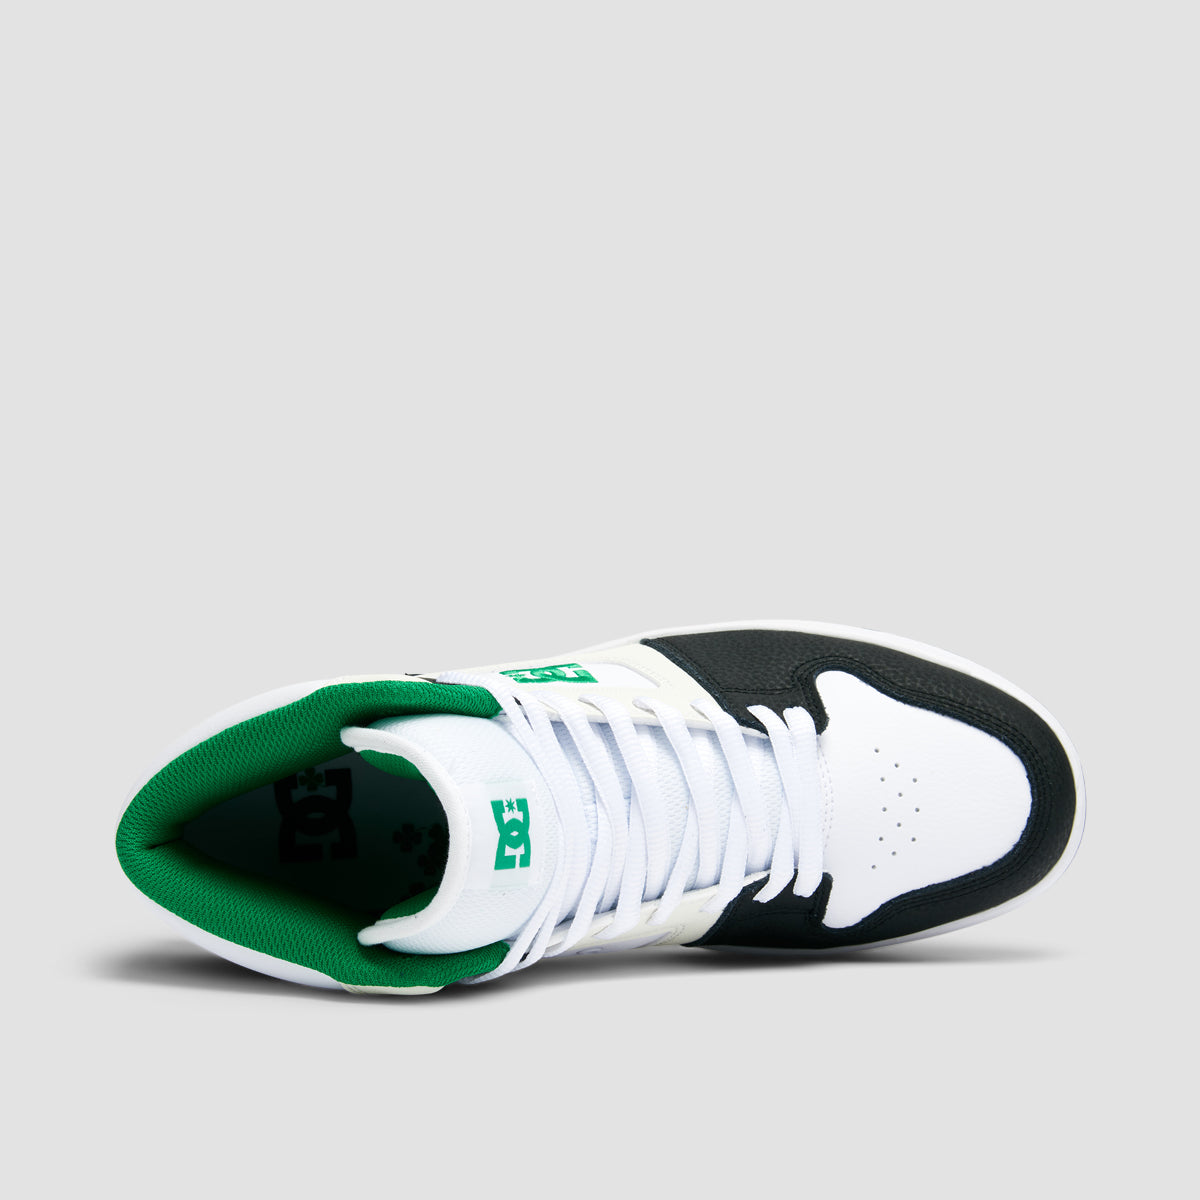 DC Manteca 4 High Top Shoes - Black/White/Green